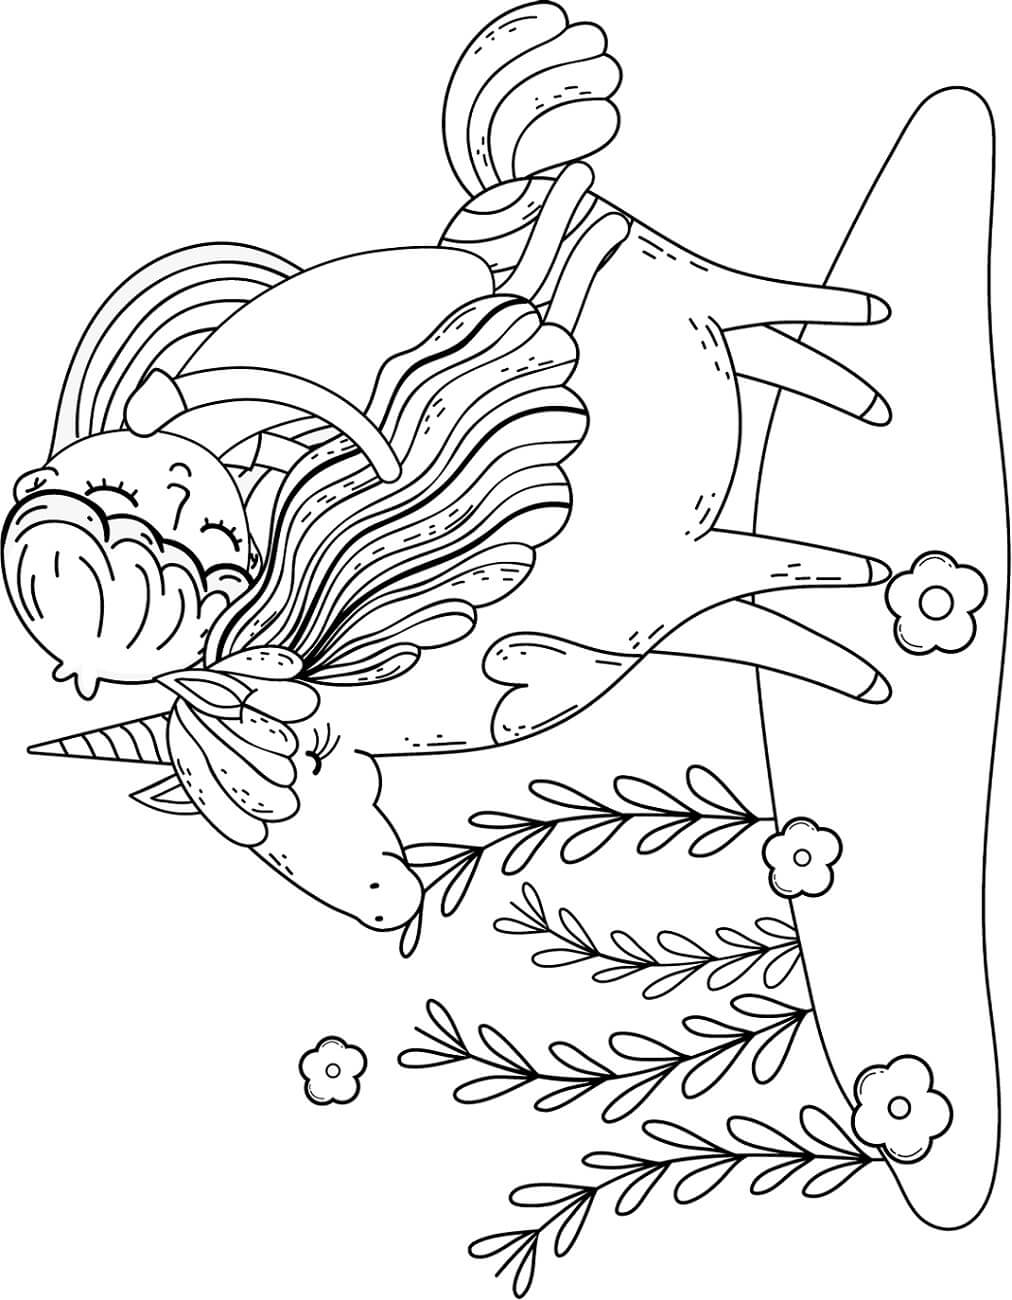 Princesinha Dormindo no Unicórnio para colorir